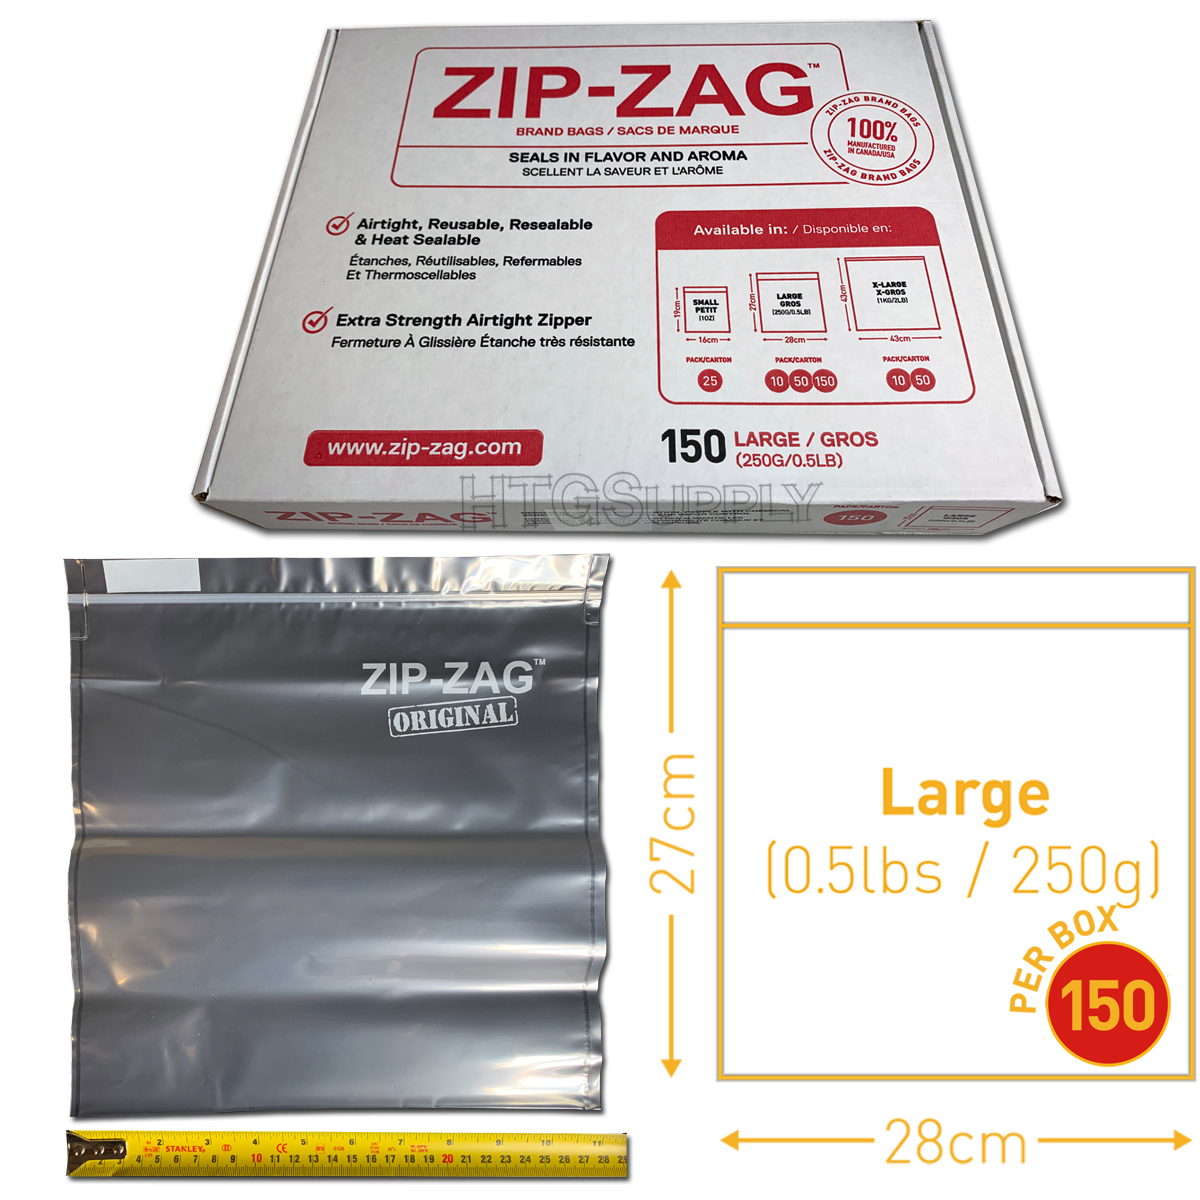 https://www.htgsupply.com/wp-content/uploads/2020/04/Zip-Zag-Large-150pack.jpg